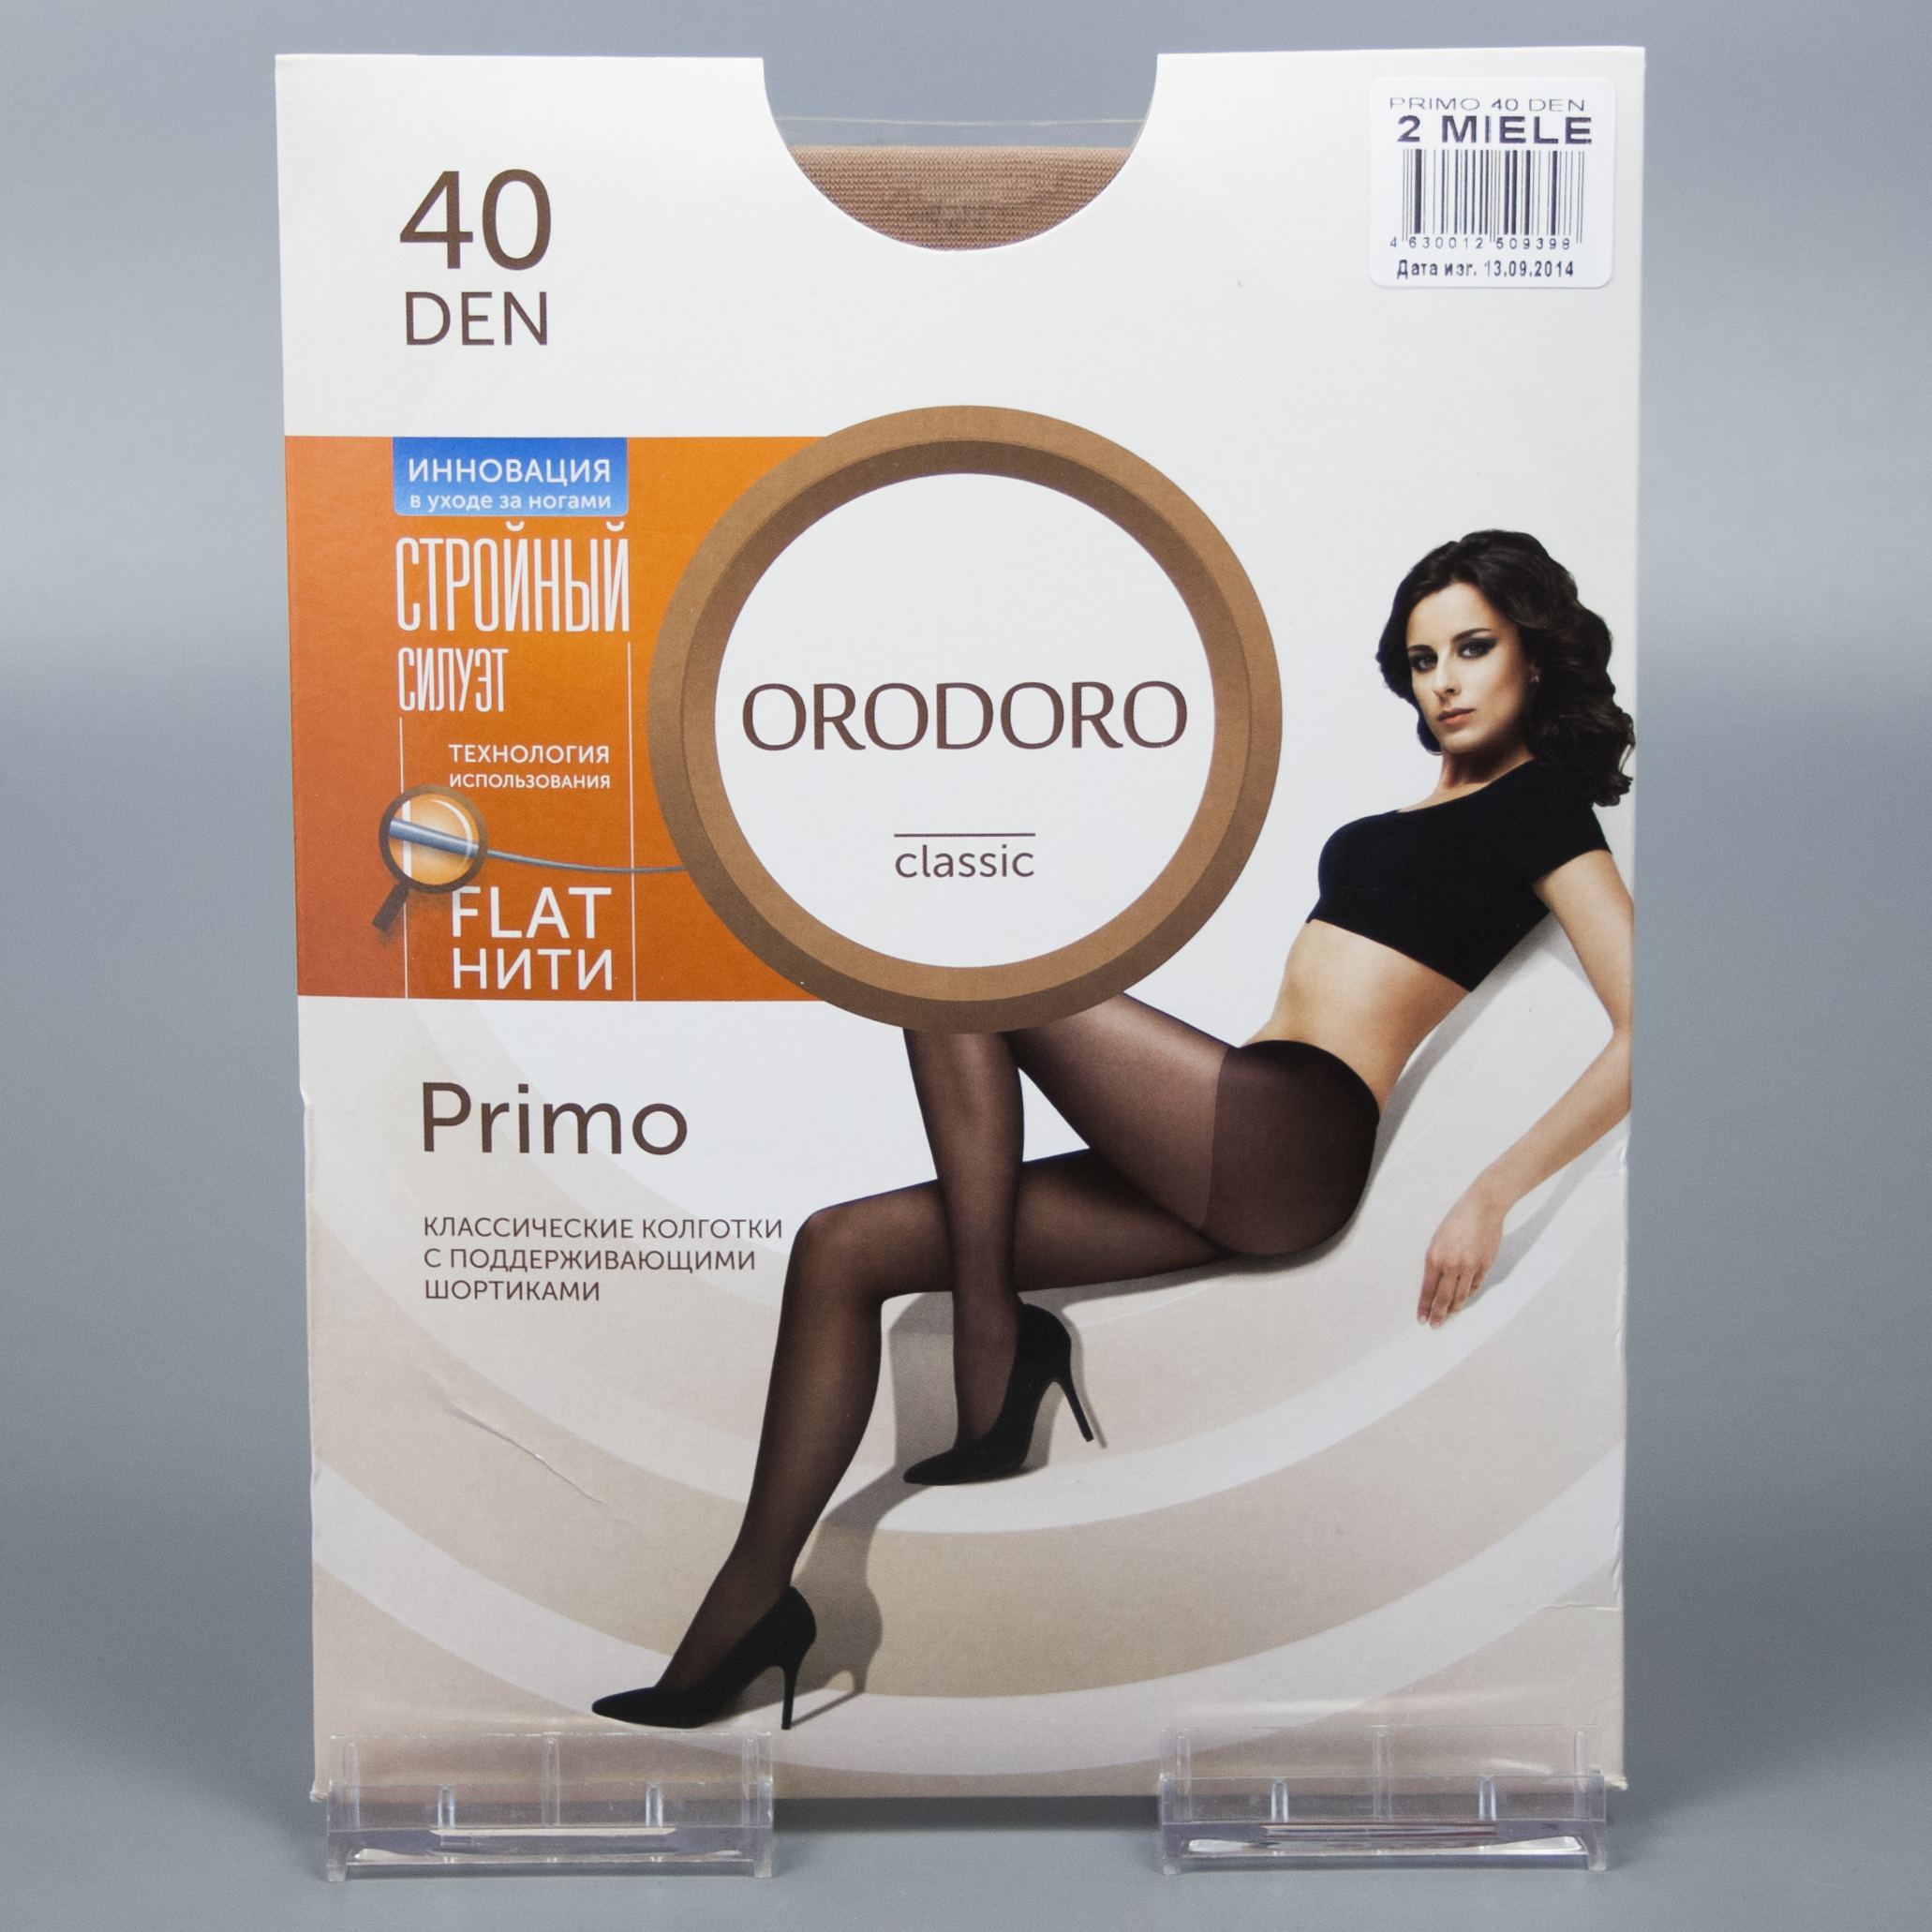 Колготки ORODORO (Primo) 40 Den, цвет легкий загар (miele), размер 2